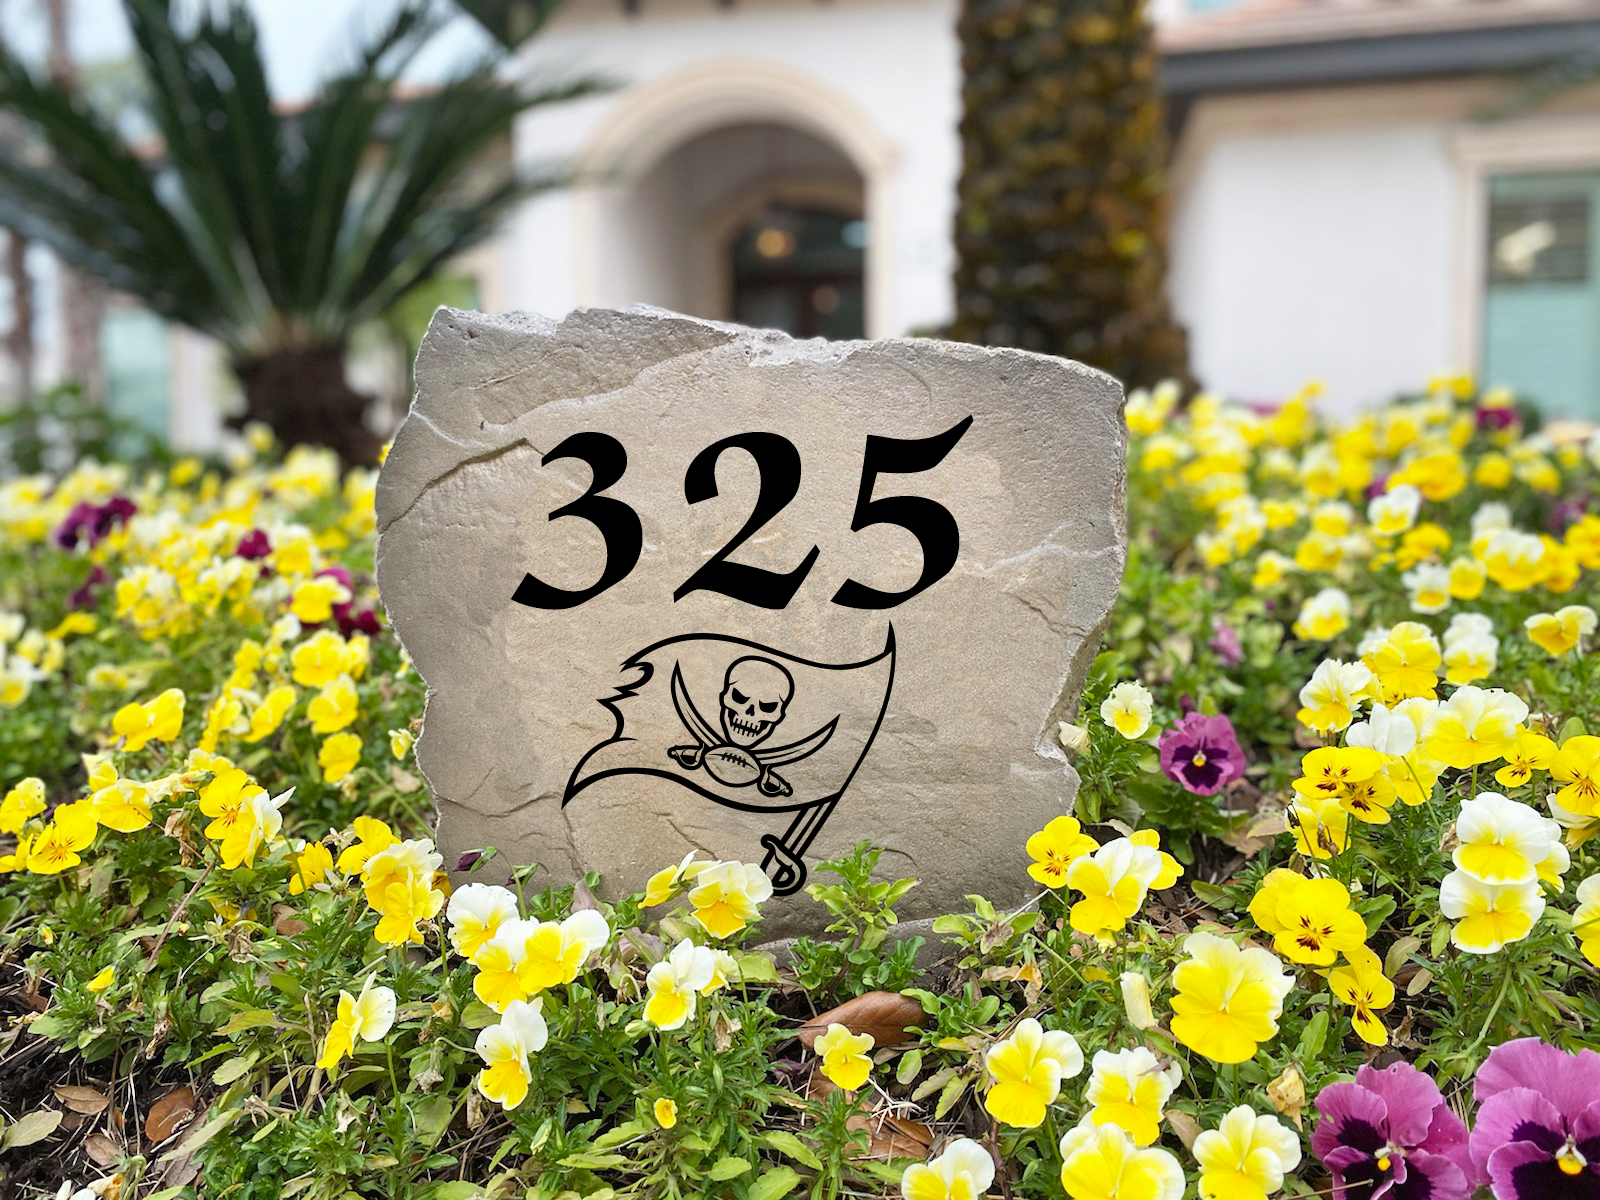 Tampa Bay Buccaneers Design-A-Stone Landscape Art Address Stone